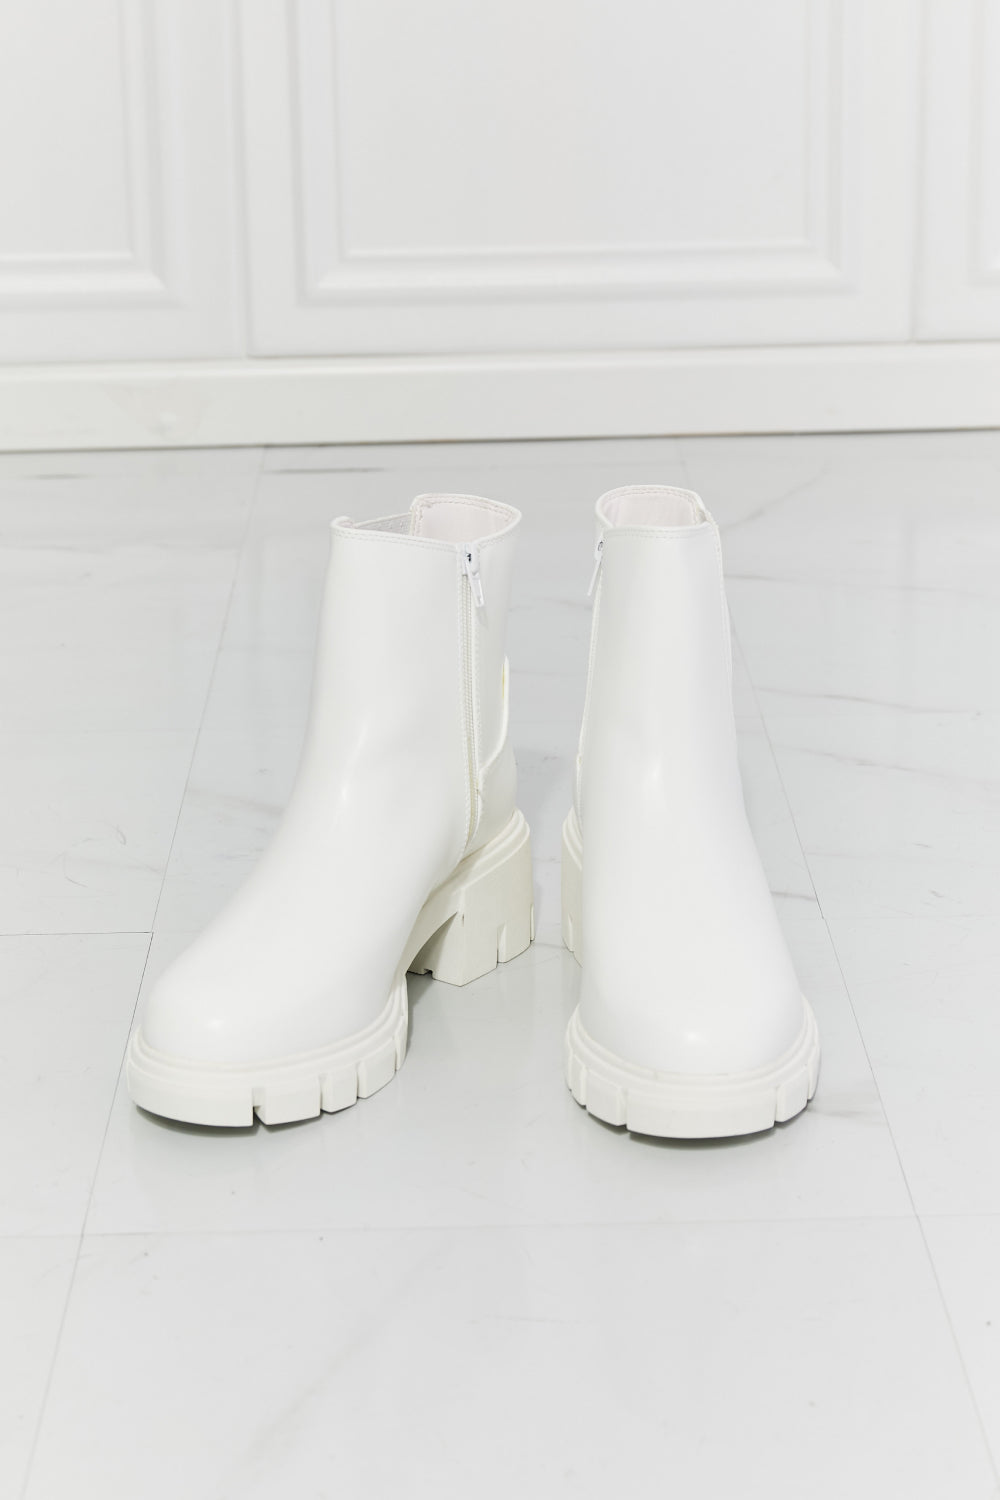 Presa - White Lug Sole Chelsea Boots, Size 6